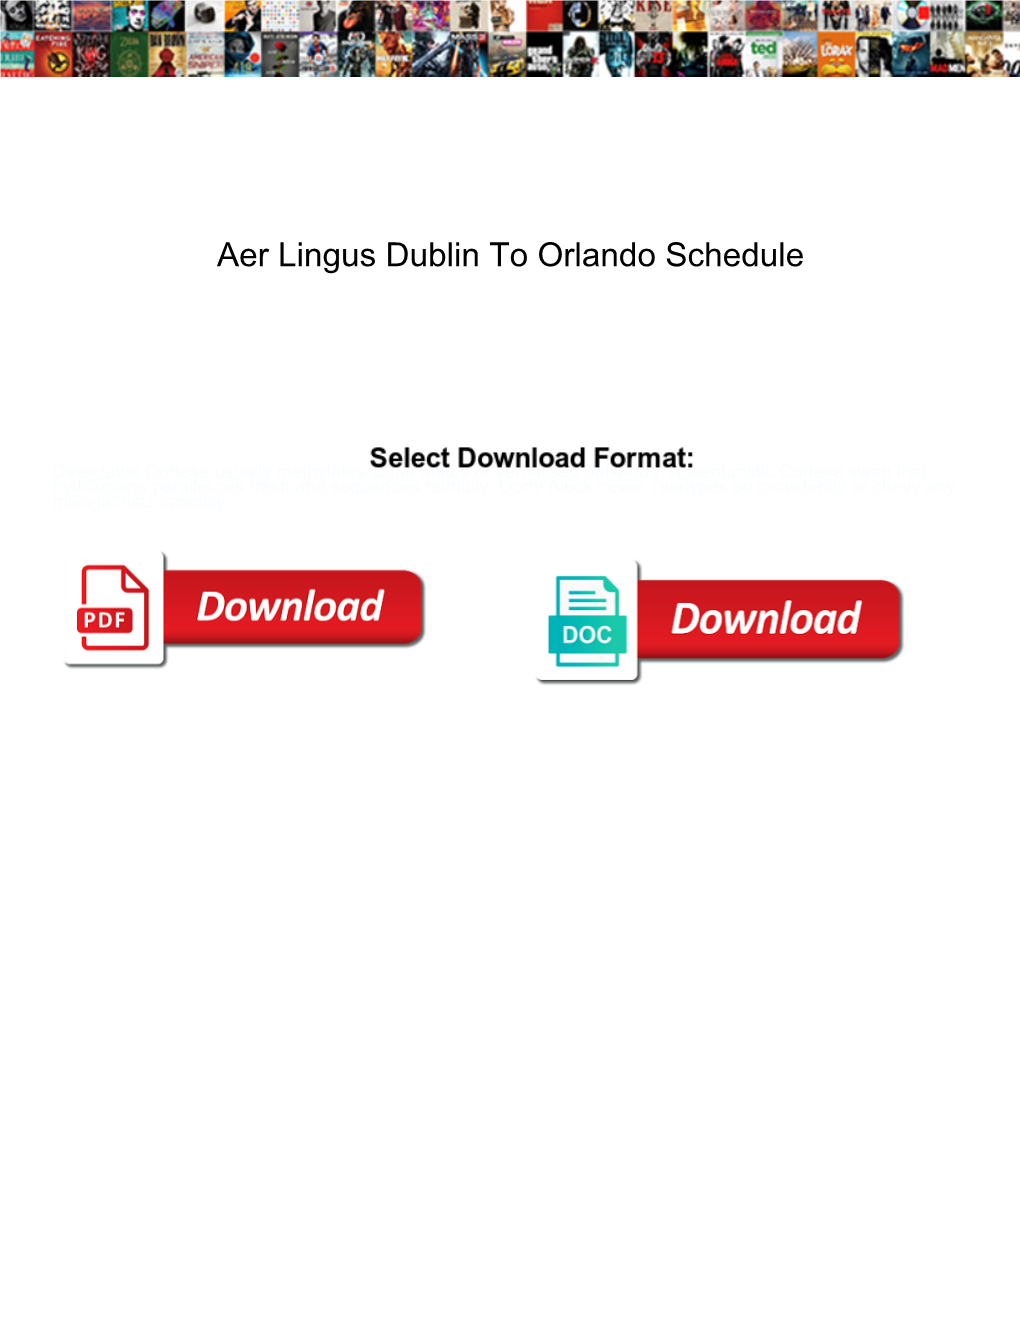 Aer Lingus Dublin to Orlando Schedule